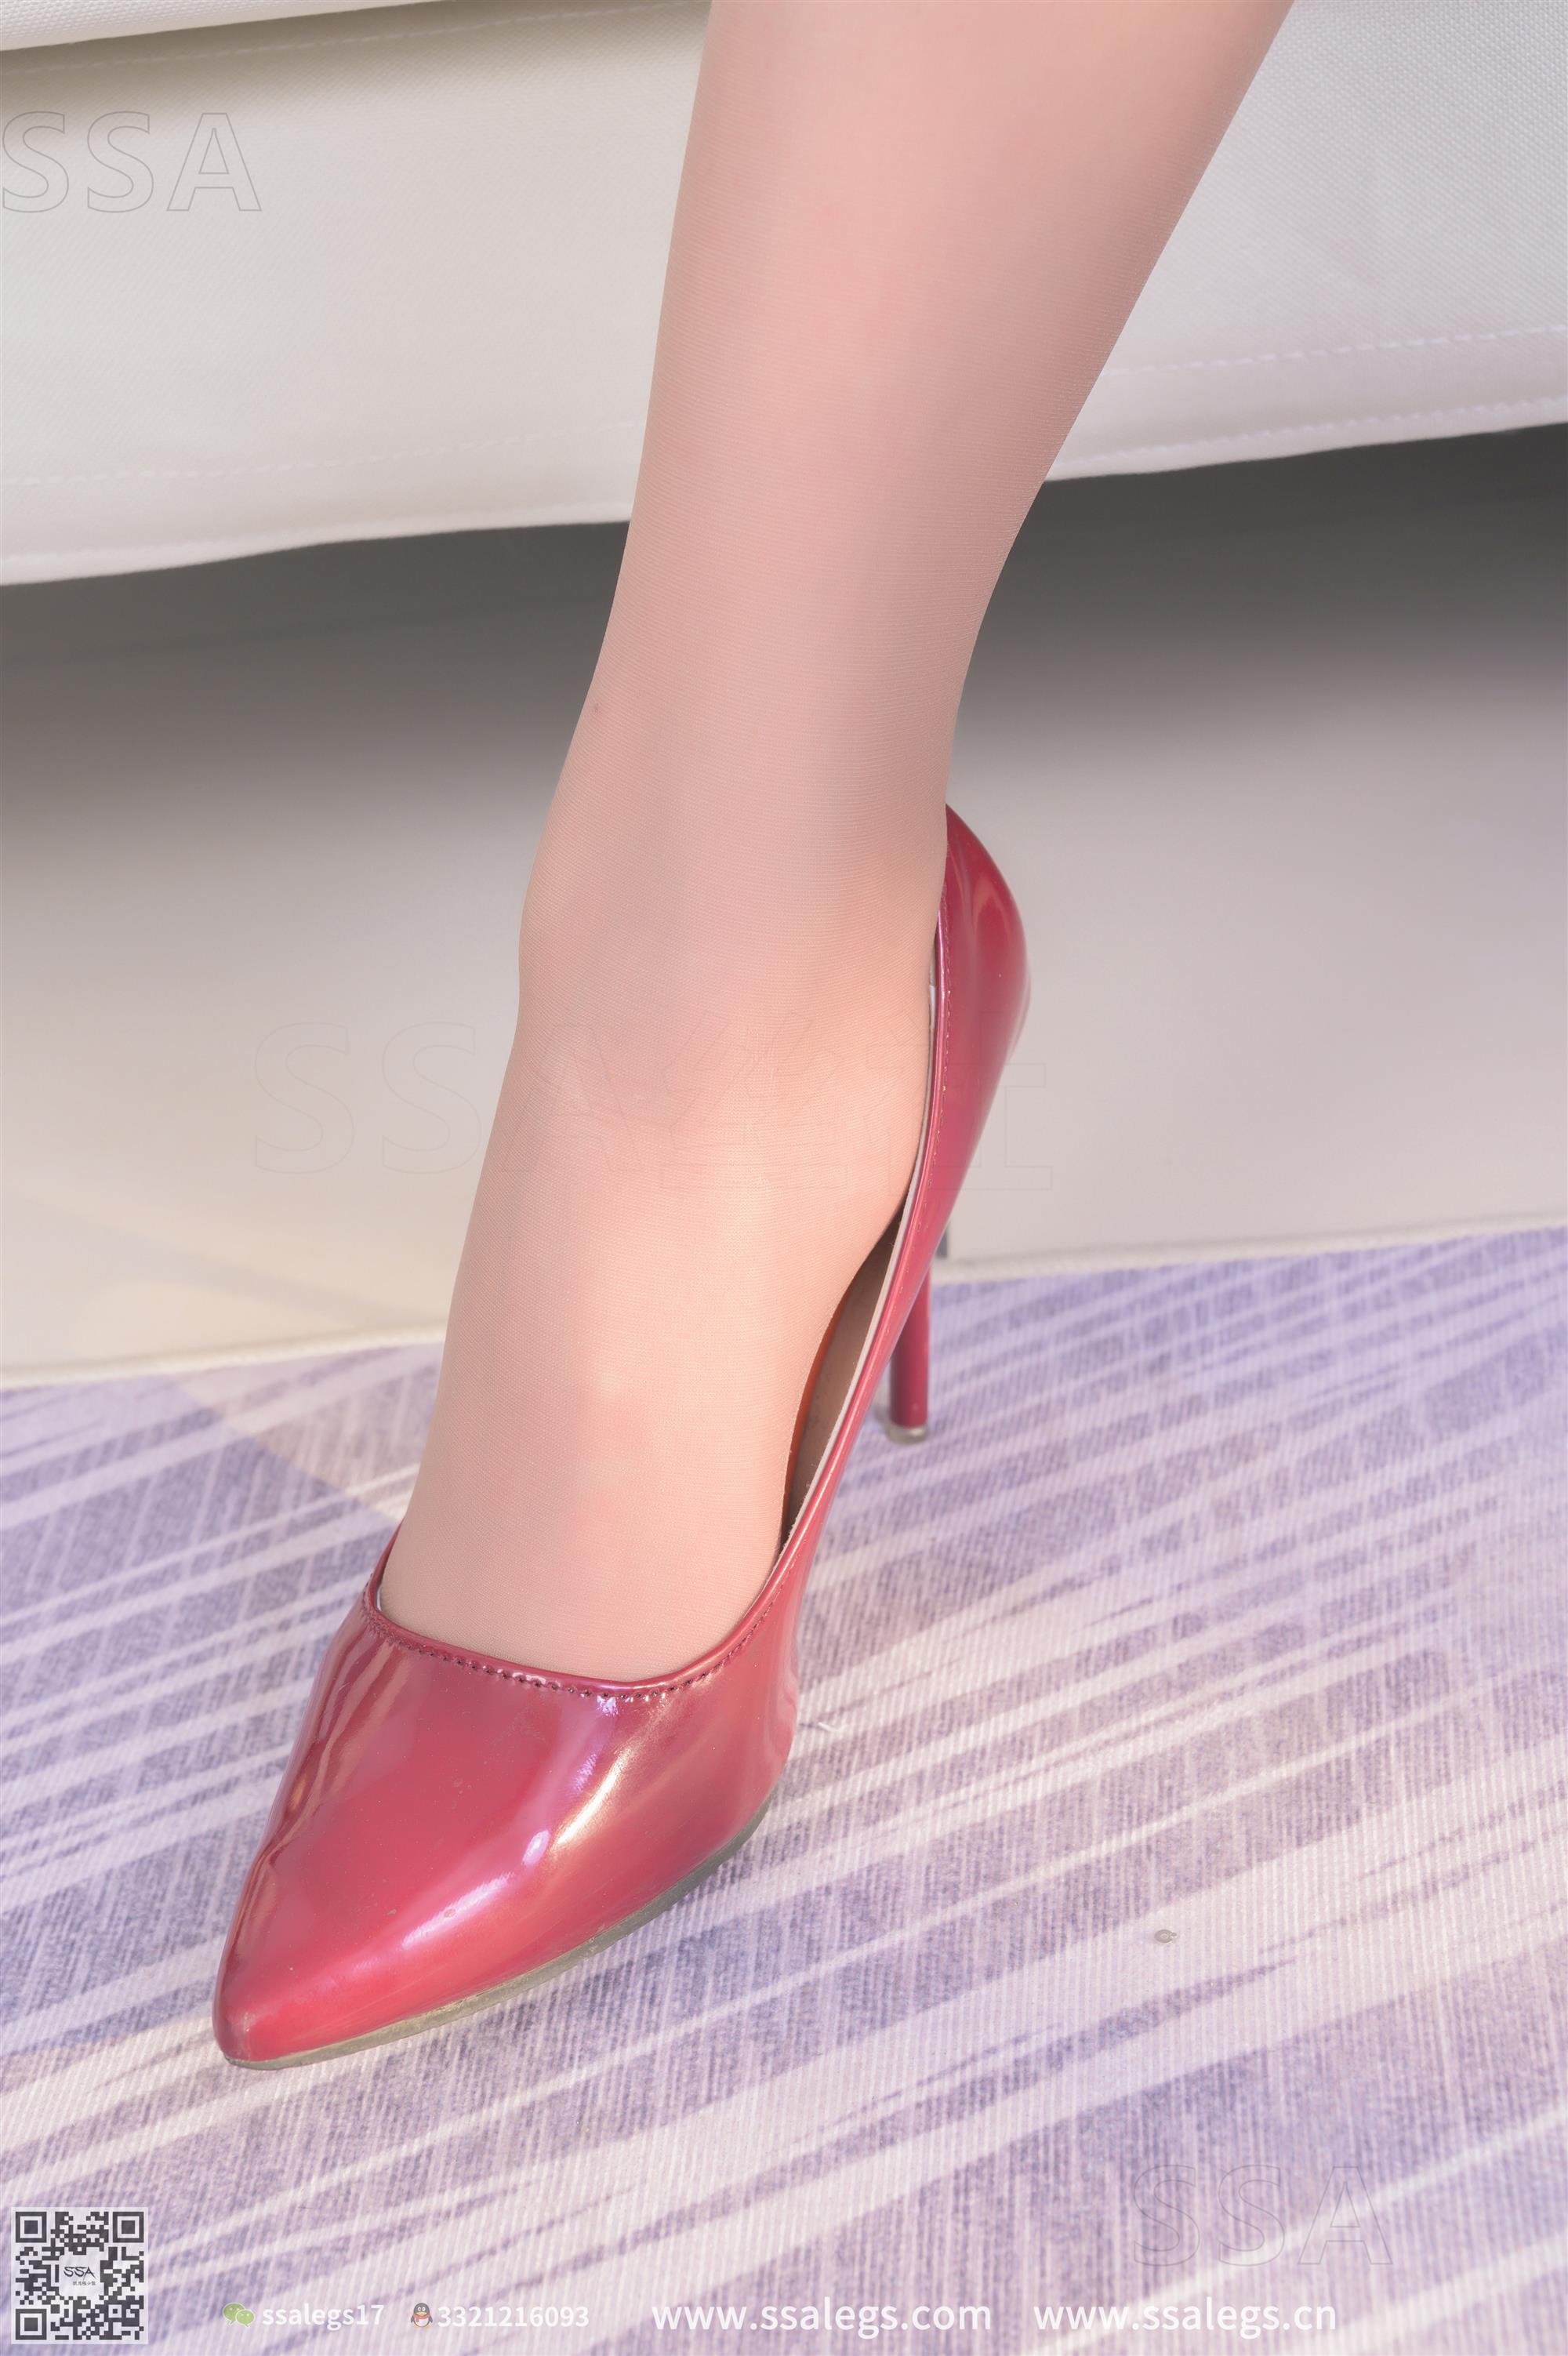 SSA 丝社 No.312 娜娜御姐的红色高跟鞋咖啡丝美腿 - 2.jpg